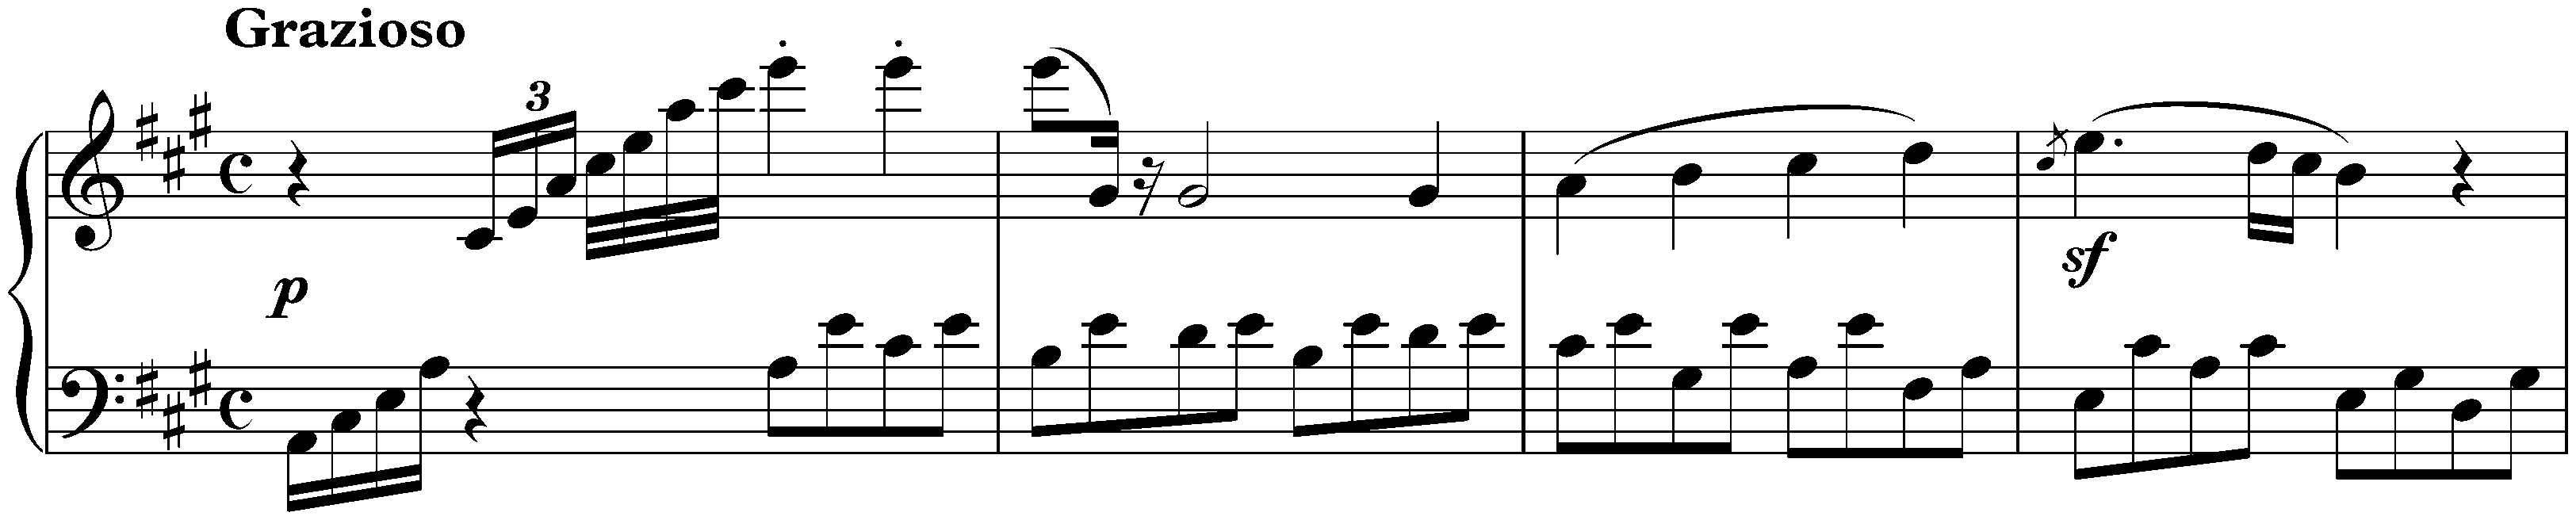 Sonata no. 2 in A major, op. 2 no. 2; 4. Rondo: Grazioso